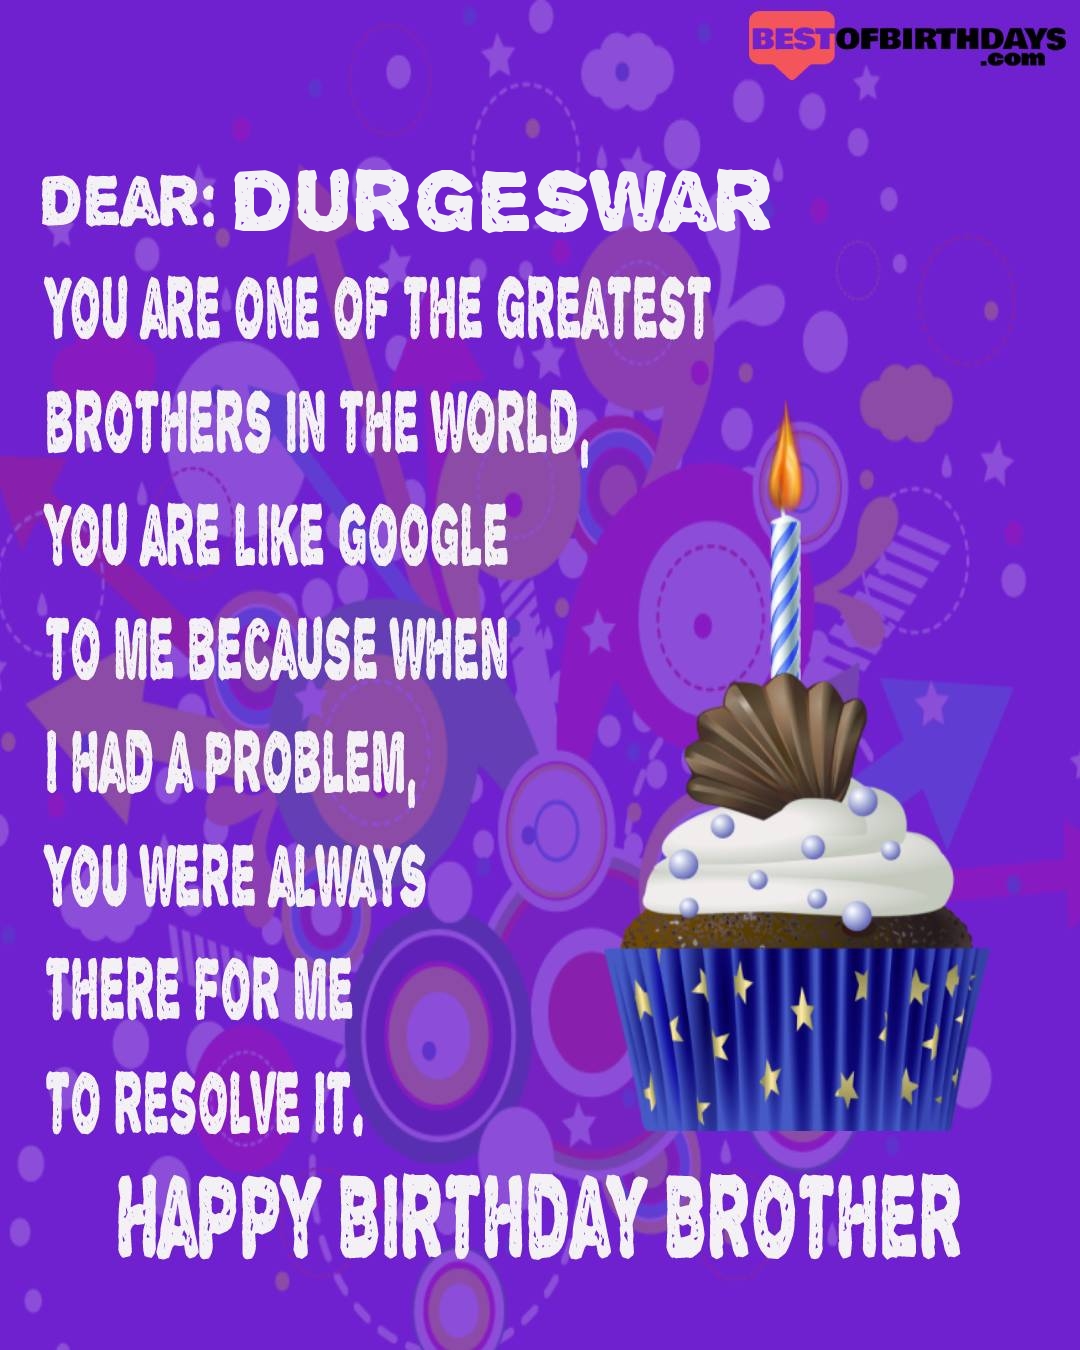 Happy birthday durgeswar bhai brother bro